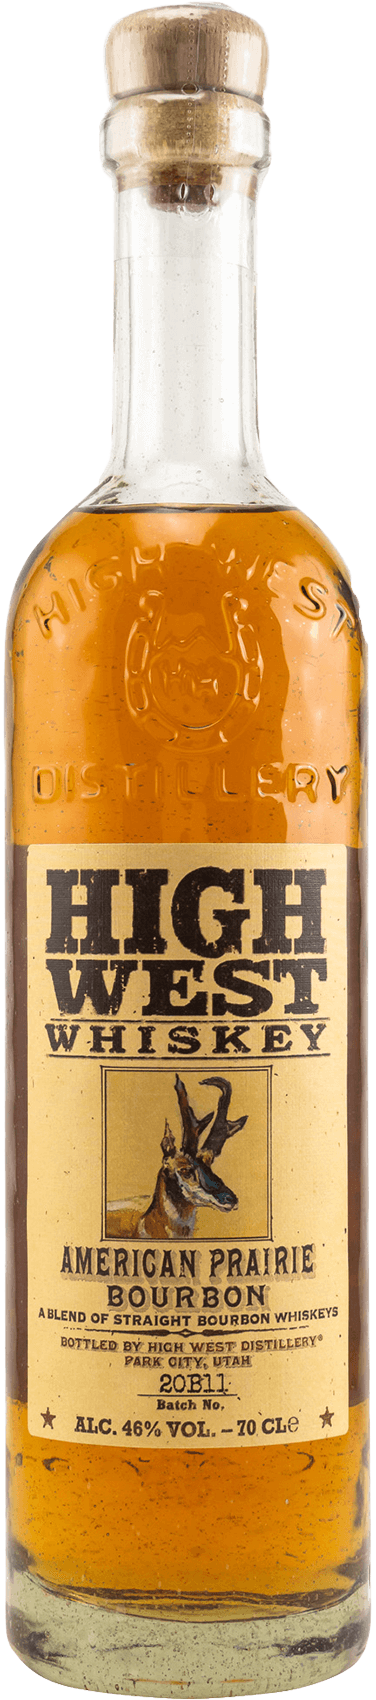 High West American Prairie Bourbon Whiskey 46%